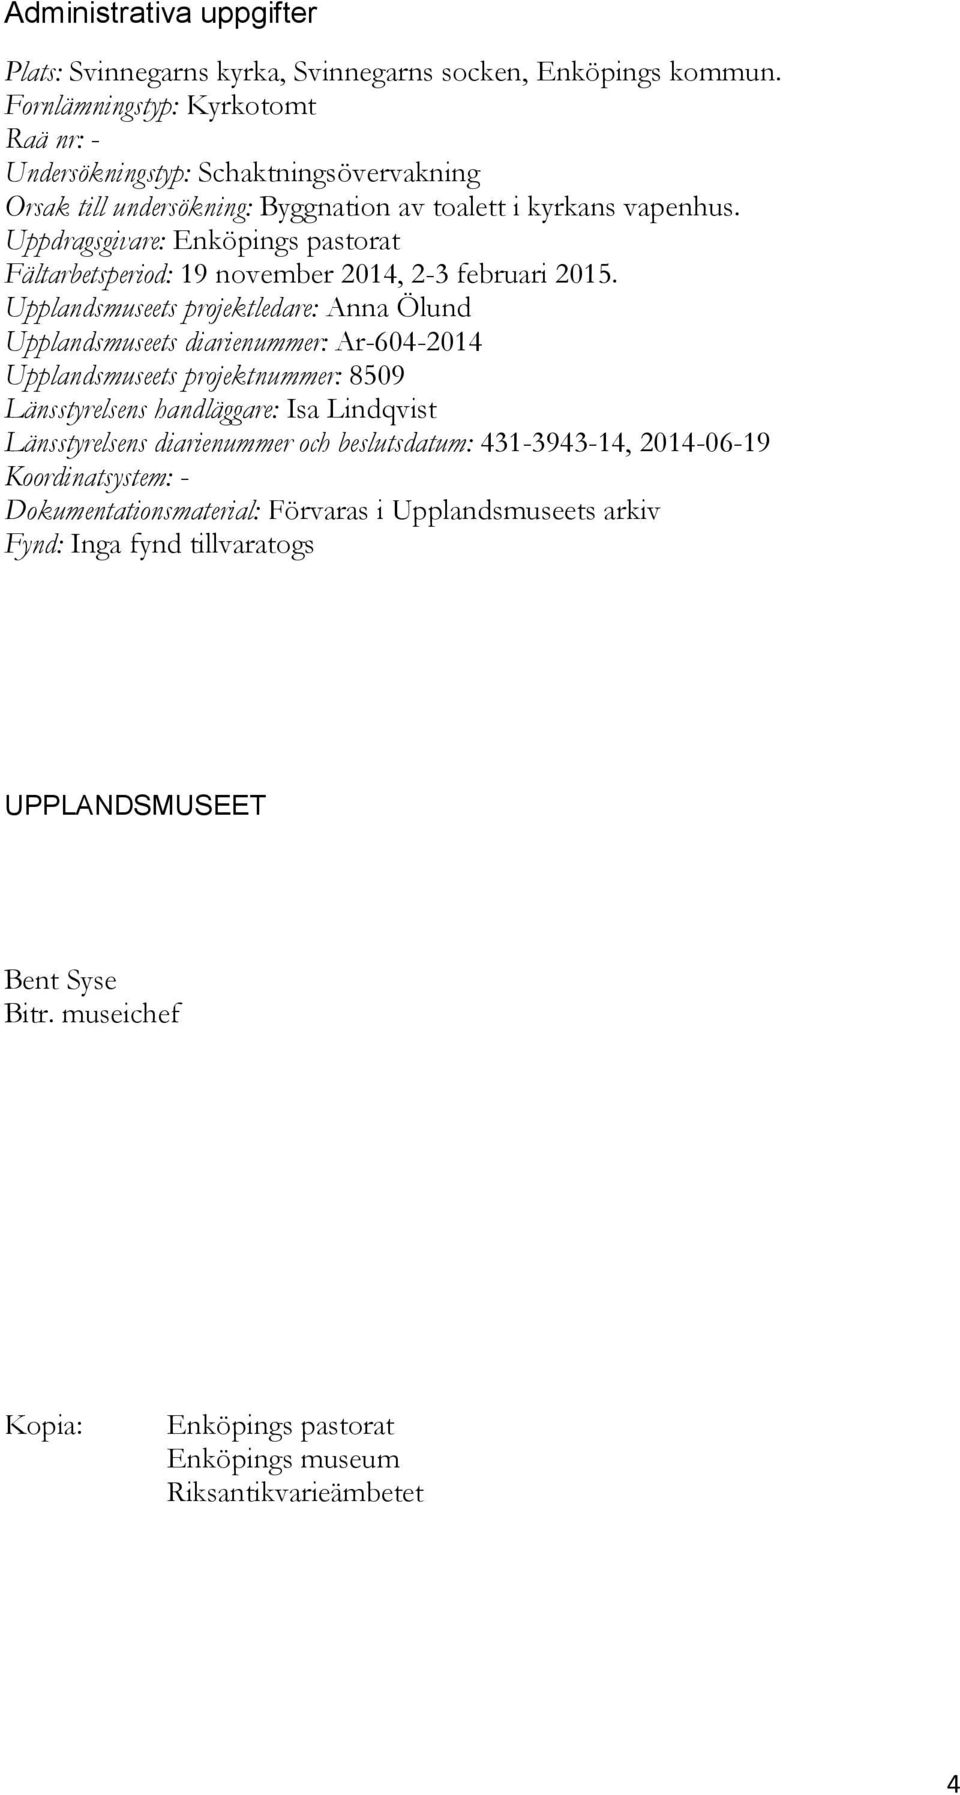 Uppdragsgivare: Enköpings pastorat Fältarbetsperiod: 19 november 2014, 2-3 februari 2015.